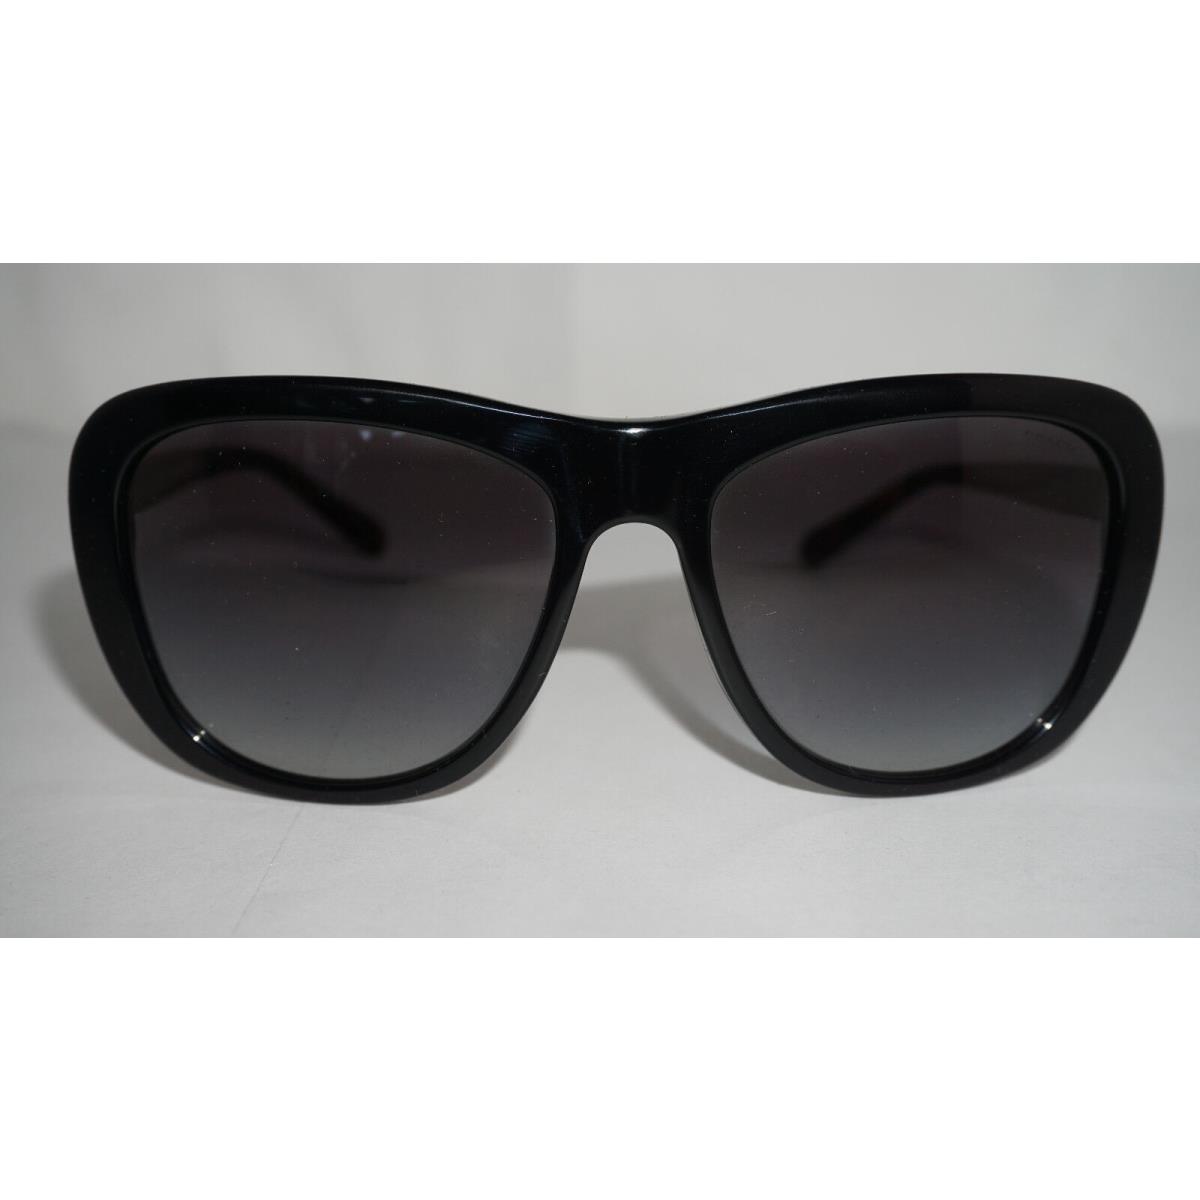 Coach sunglasses  - Black Tortoise Frame, Gray Gradient Lens